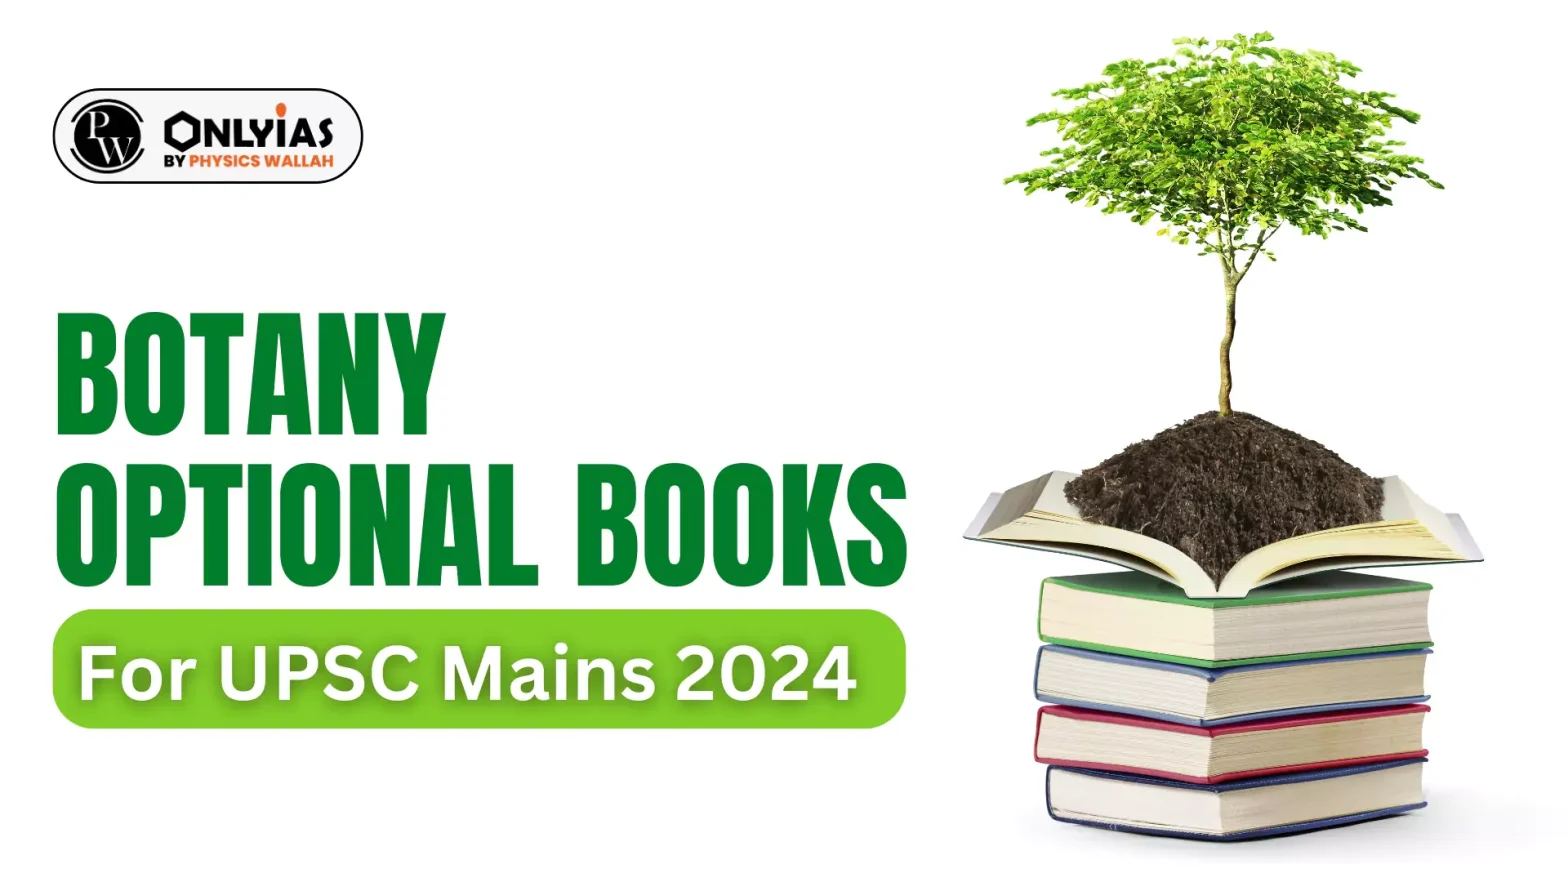 Botany Optional Books for UPSC Mains 2024